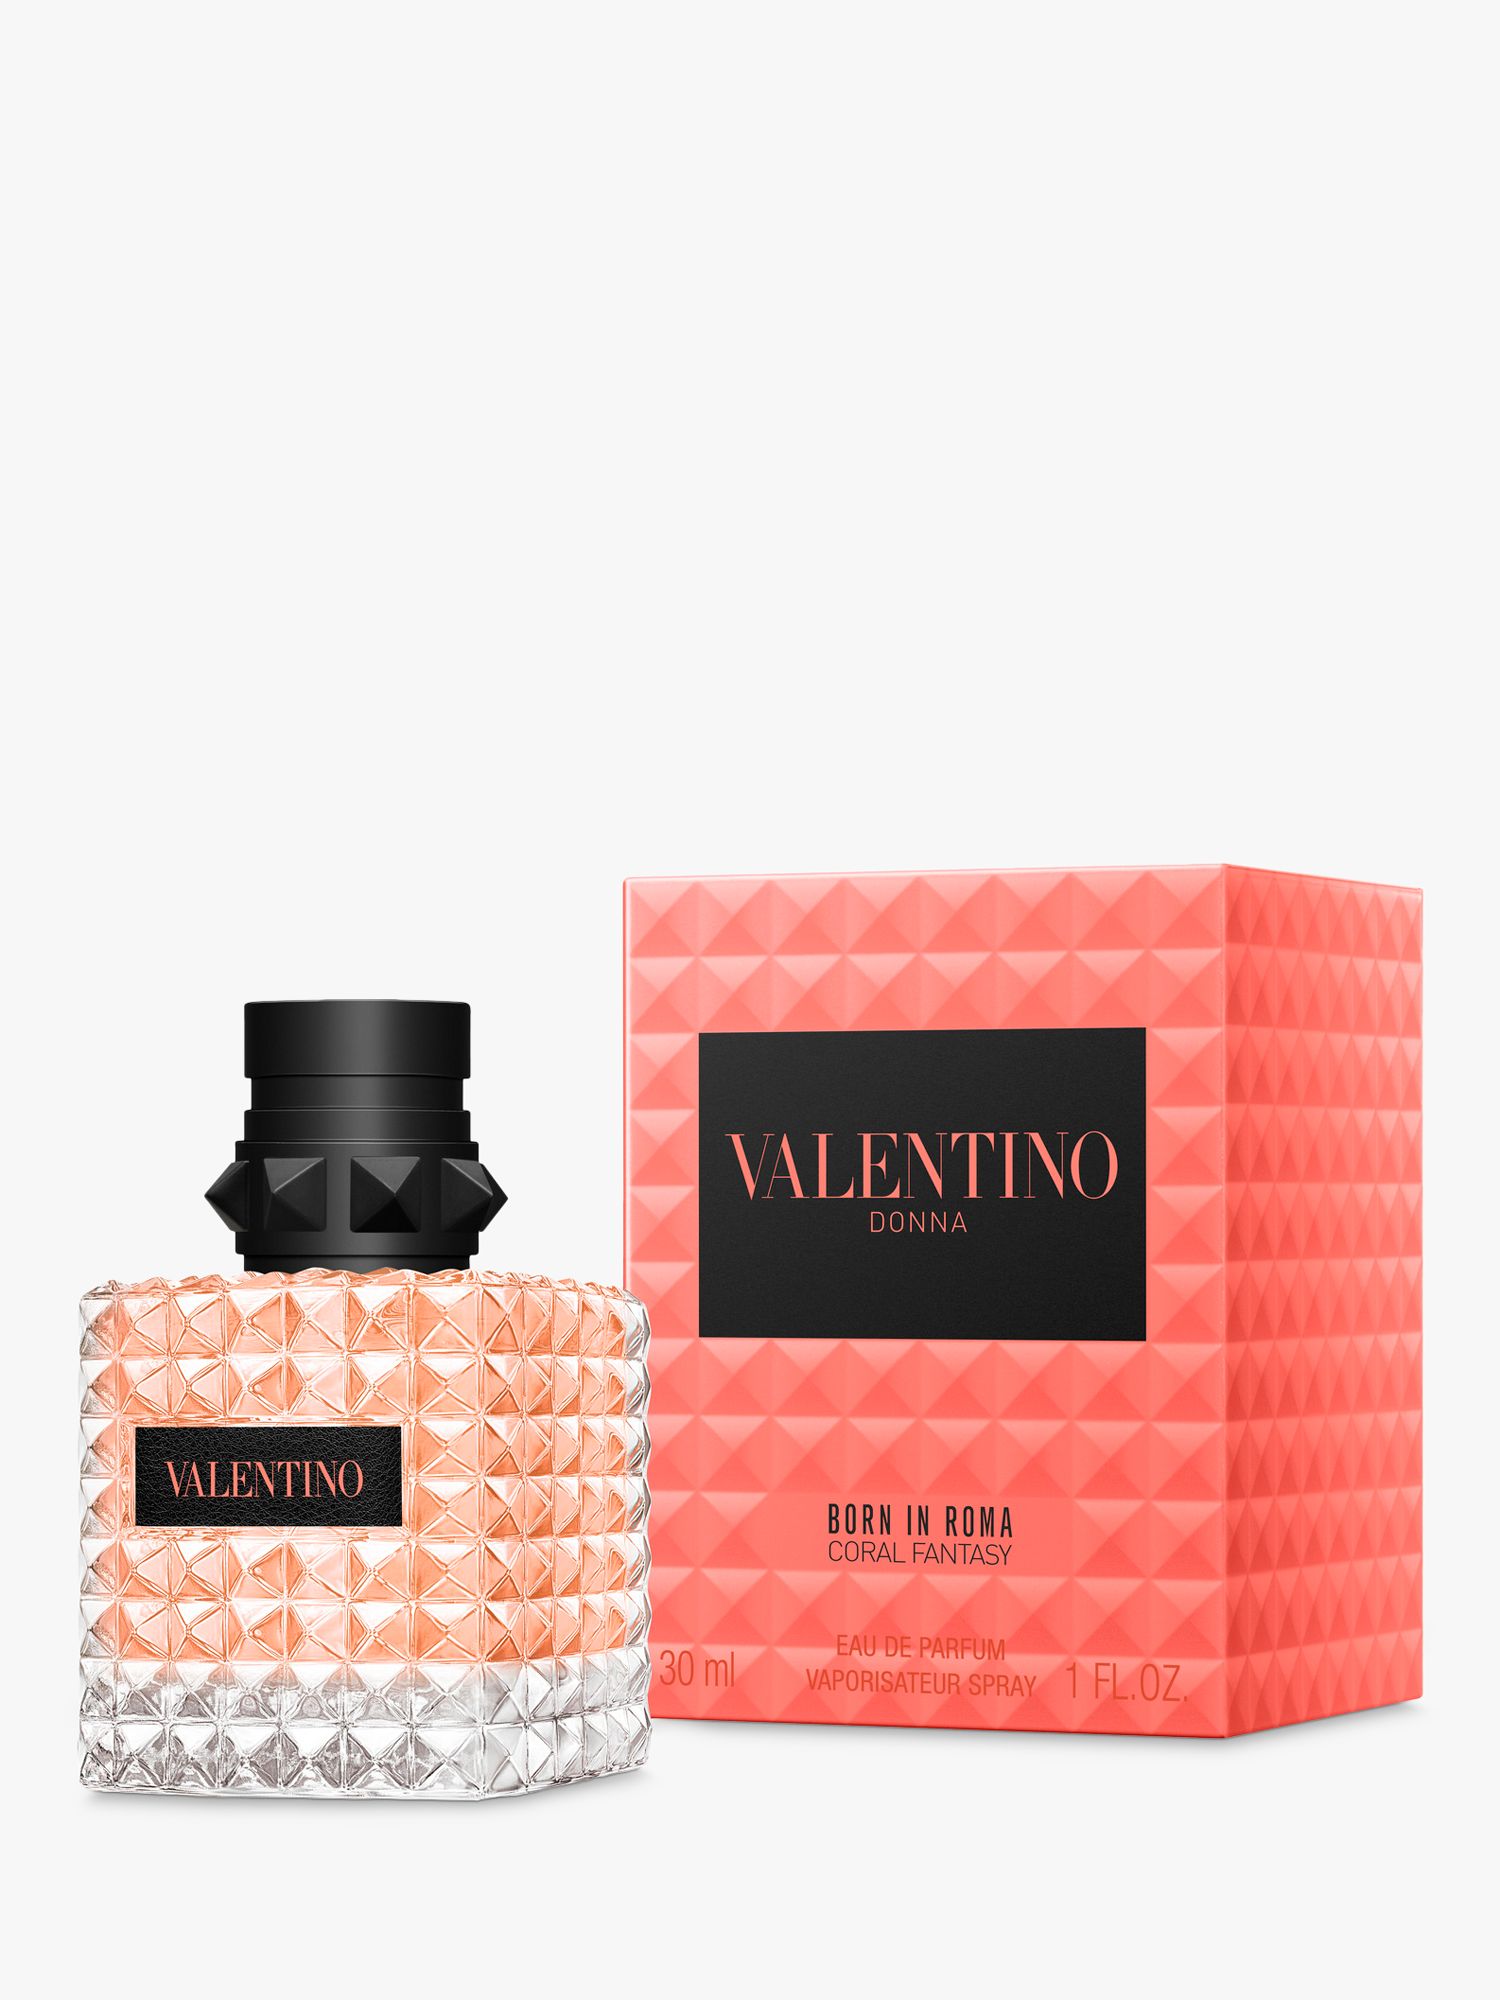 Empty perfume box Louis Vuitton City of Stars fragrance gift box